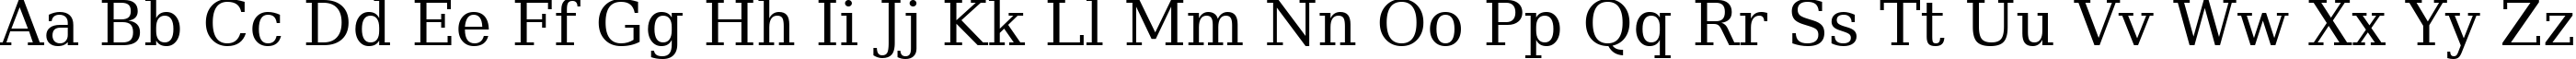 Пример написания английского алфавита шрифтом ae_Jet